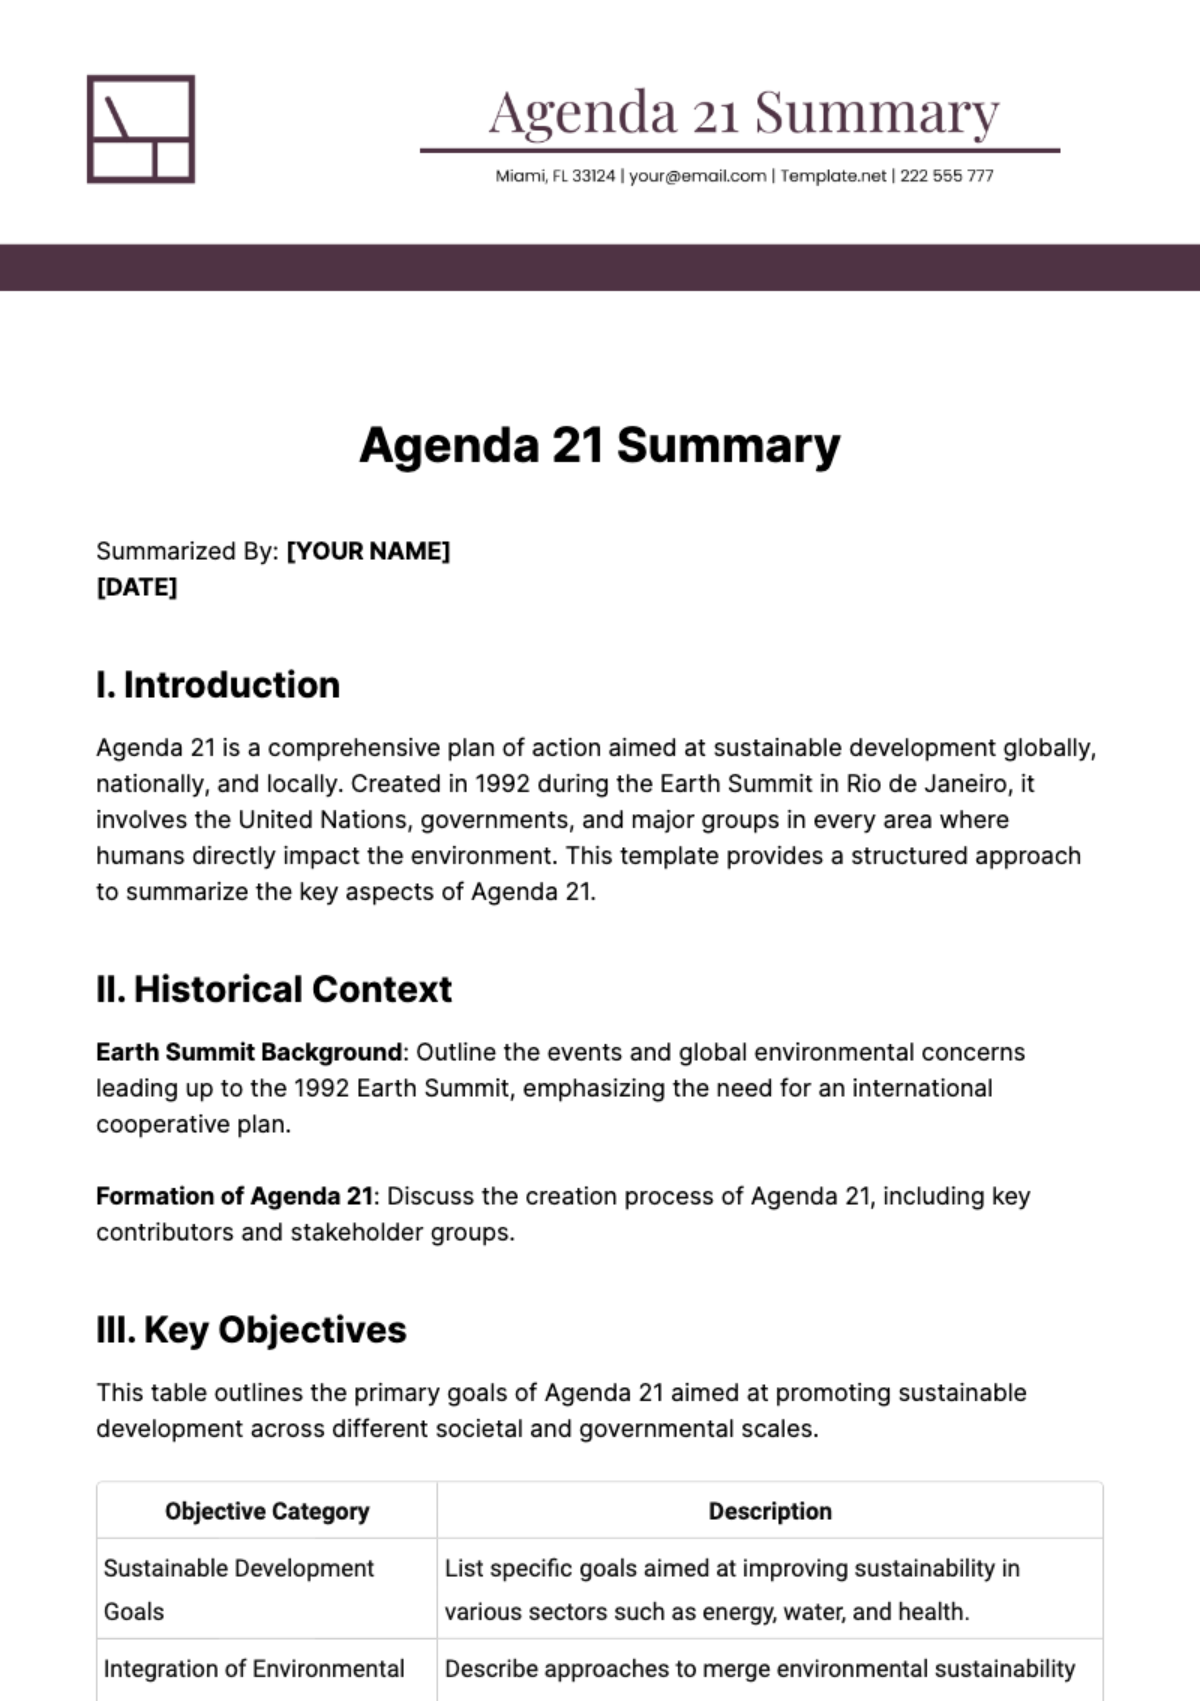 Free Agenda 21 Summary Template